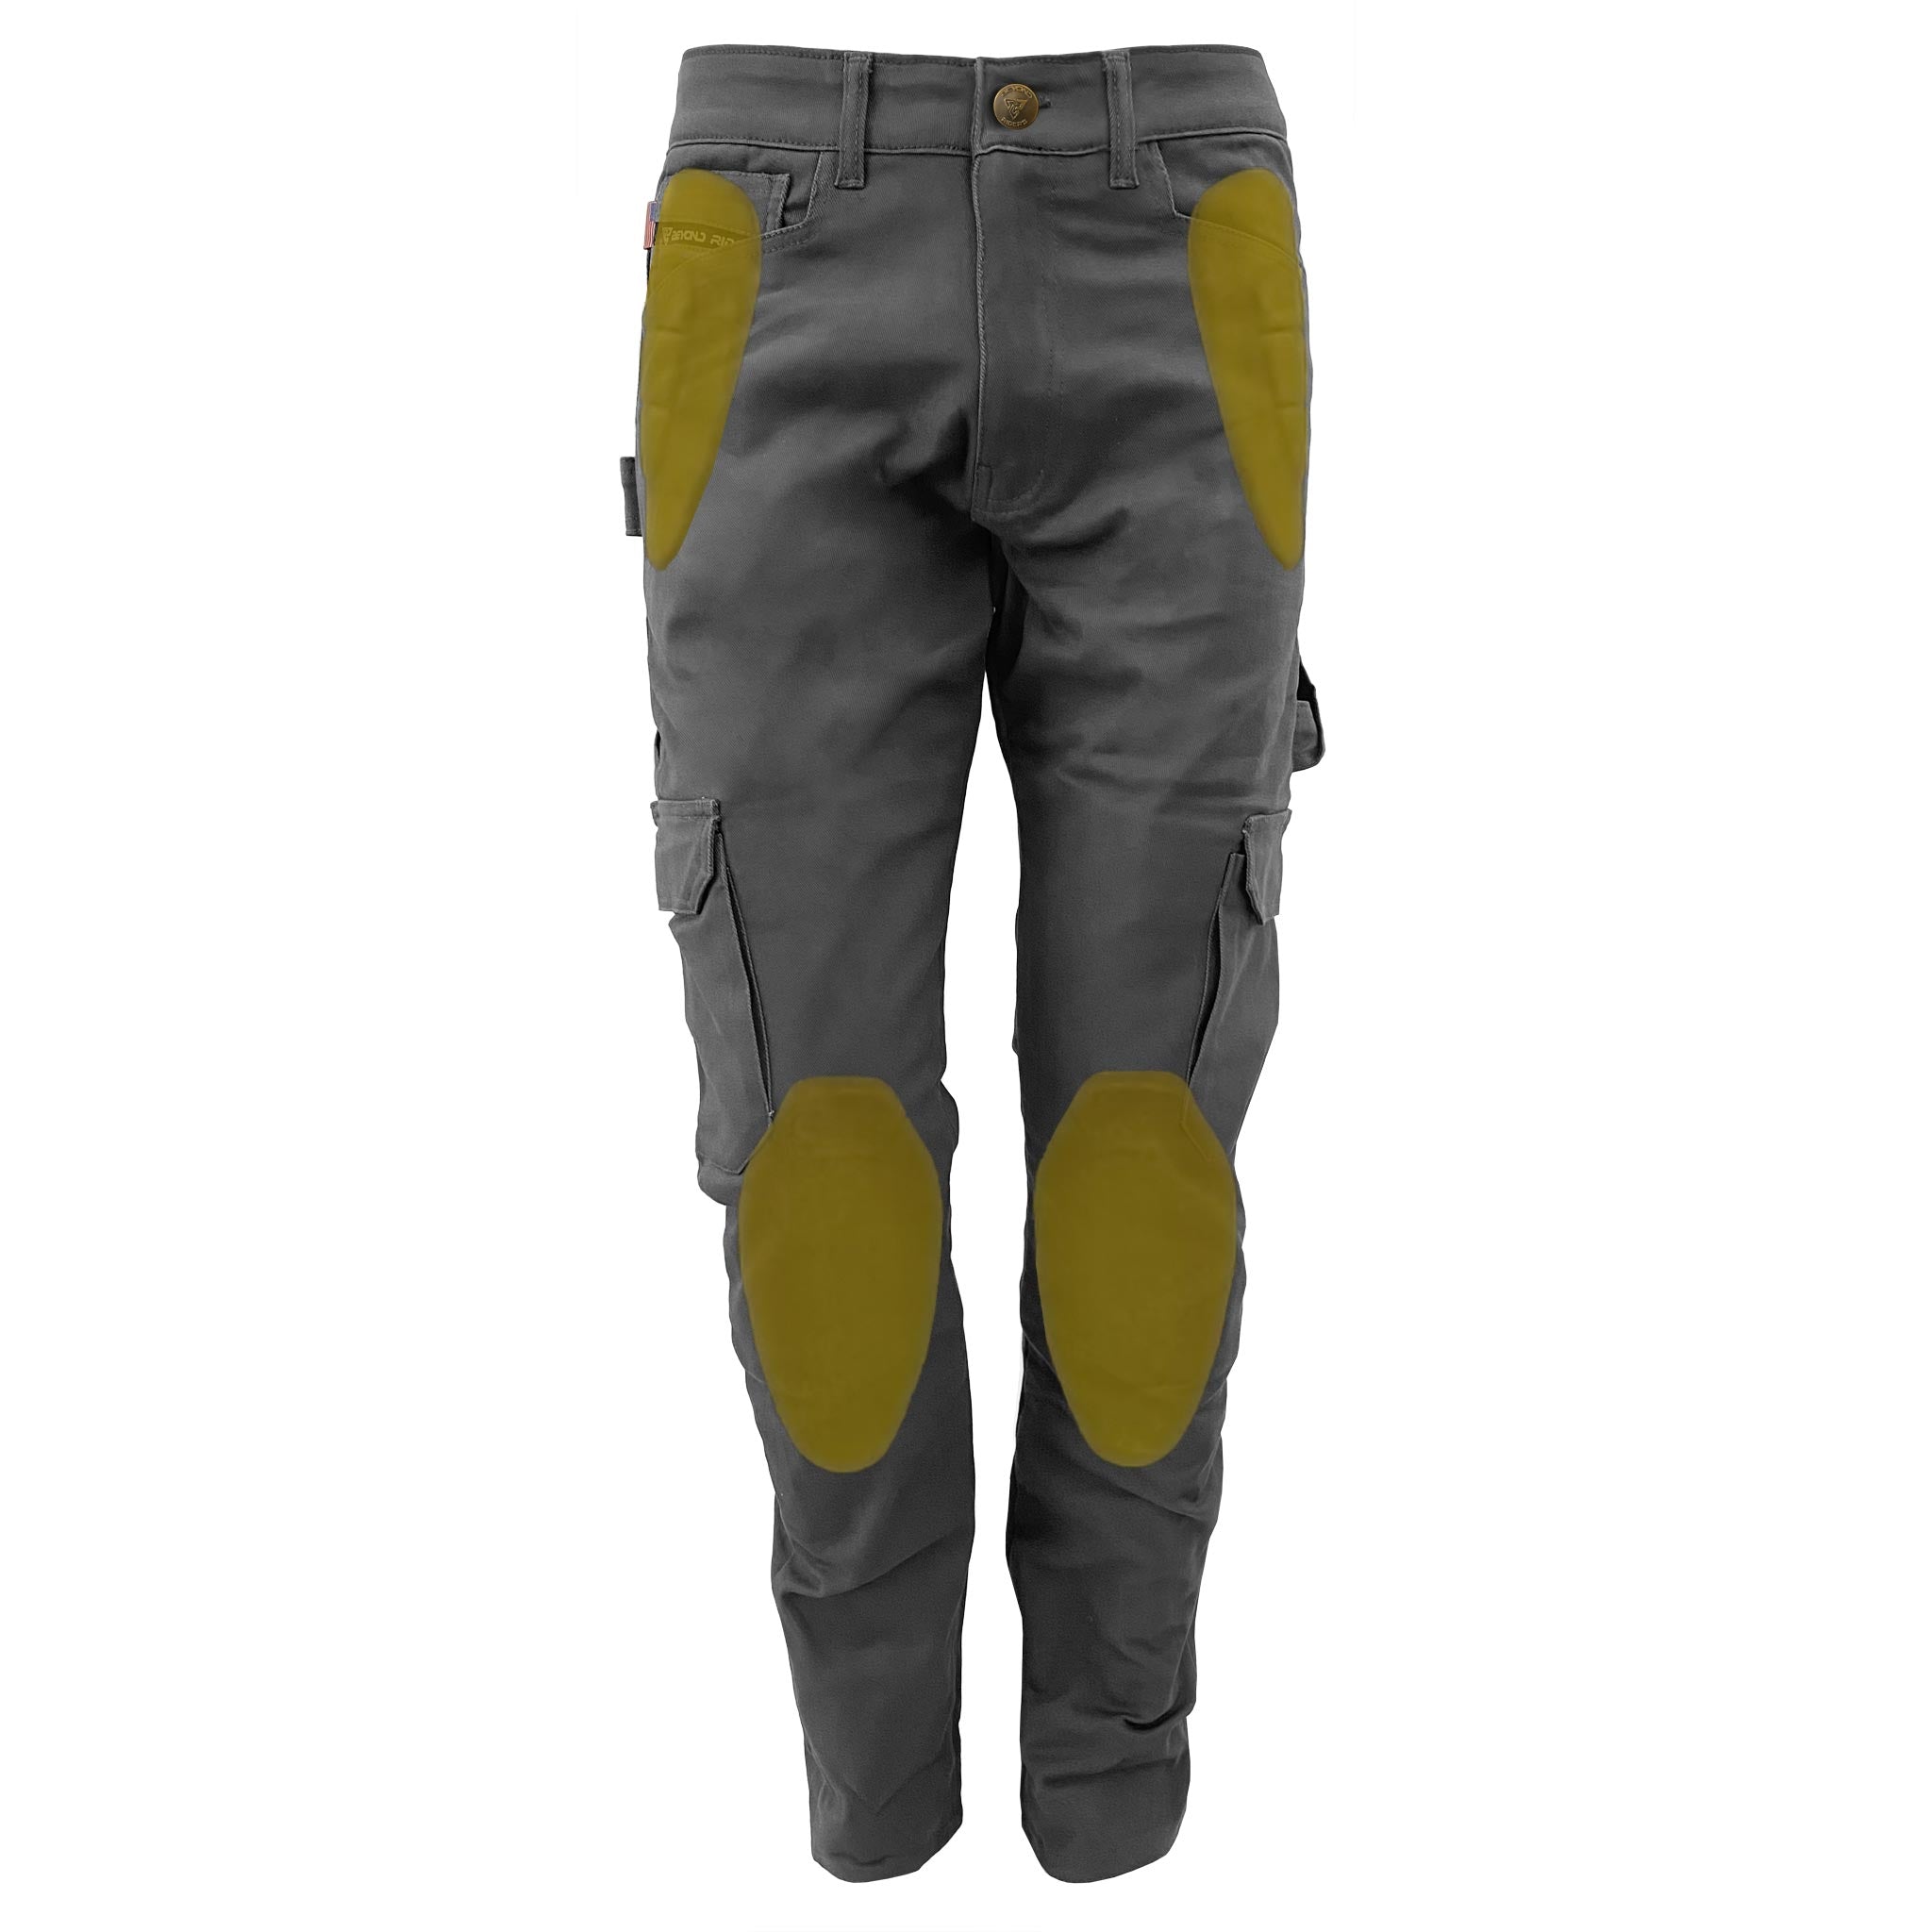 Straight Leg Cargo Pants - Gray